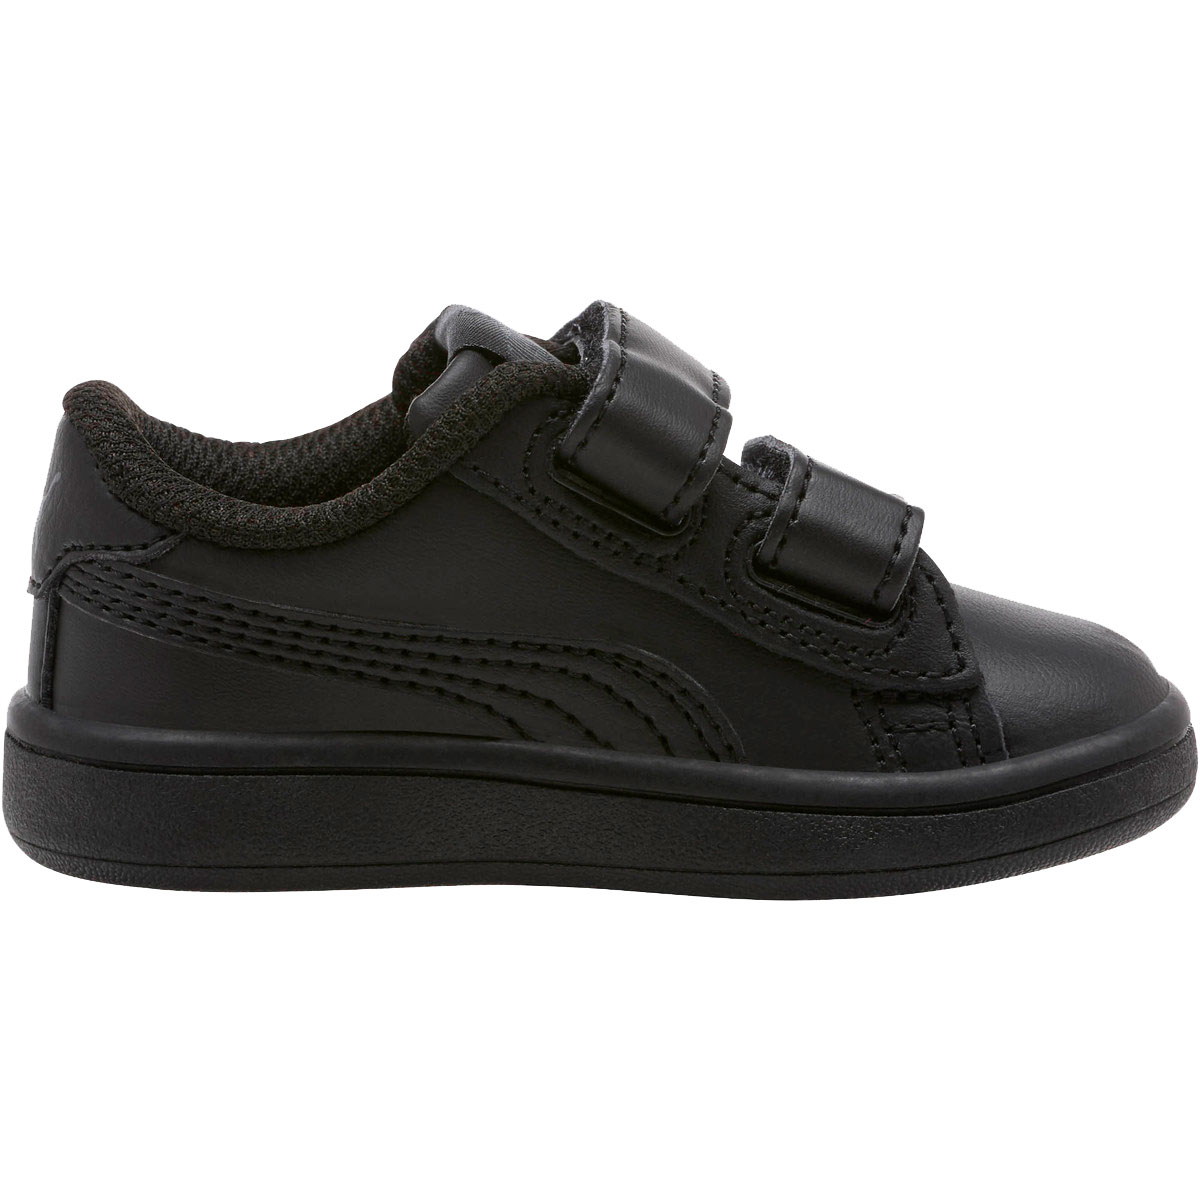 Puma Toddler Boys' Smash V2 Lv Sneakers - Black, 6